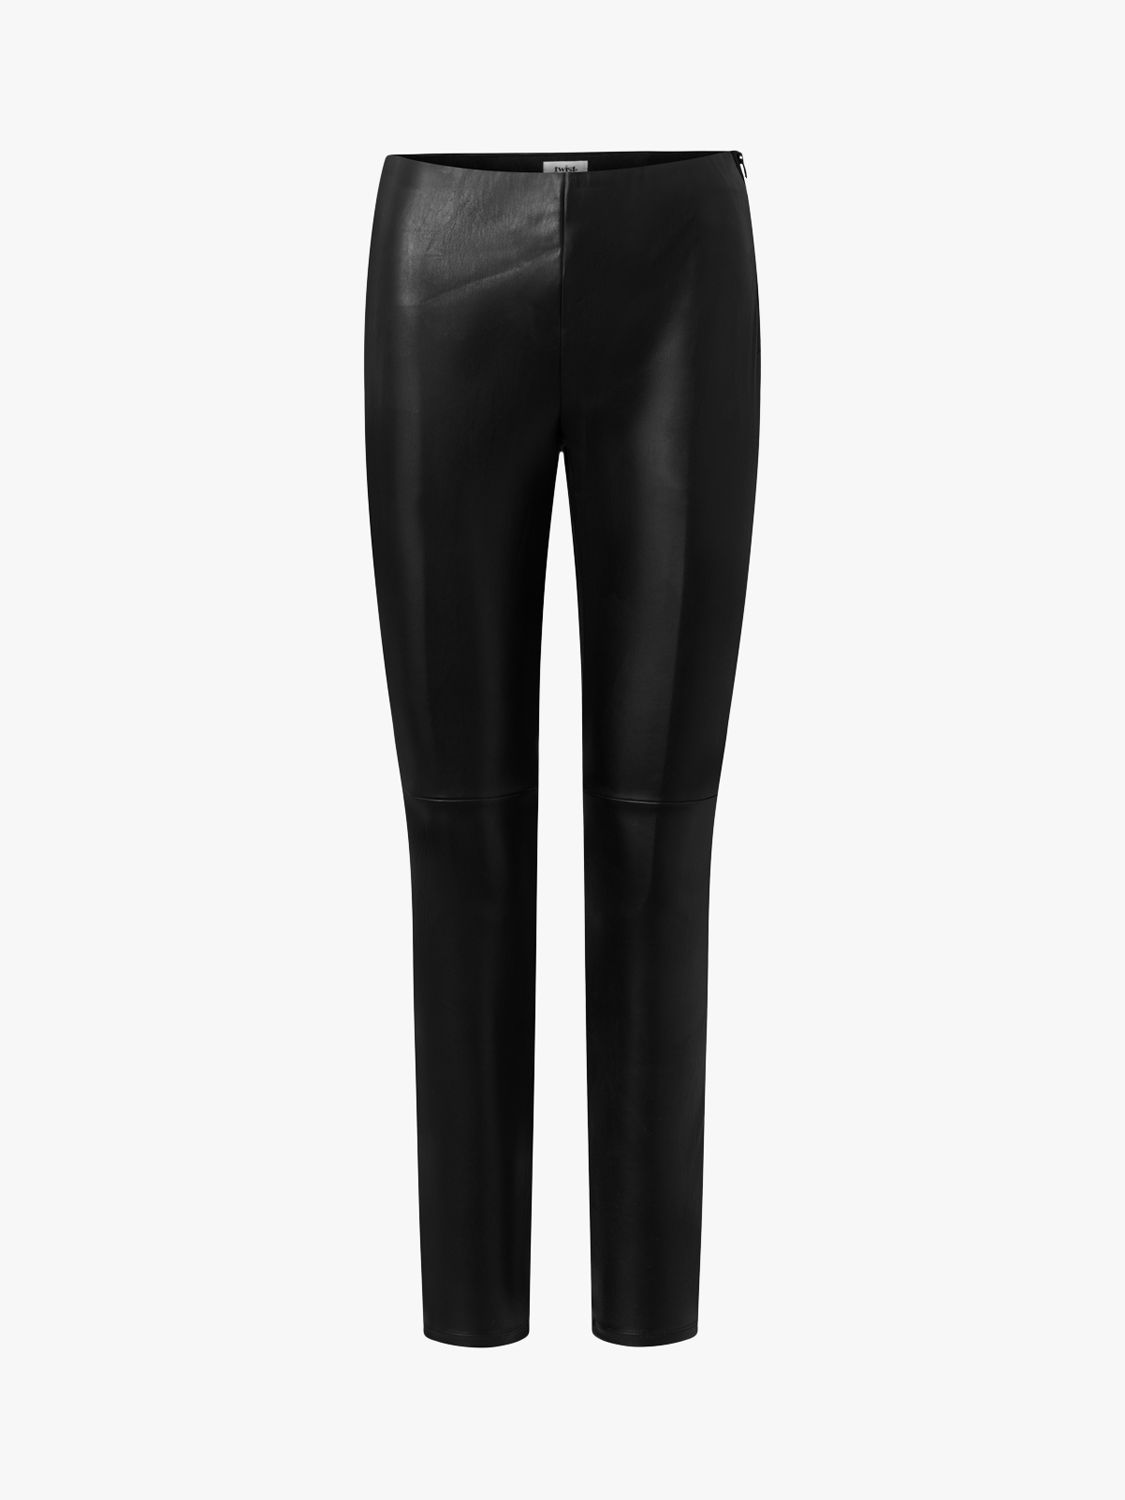 Buy Twist & Tango Arleen Faux Leather Skinny Trousers, Black Online at johnlewis.com